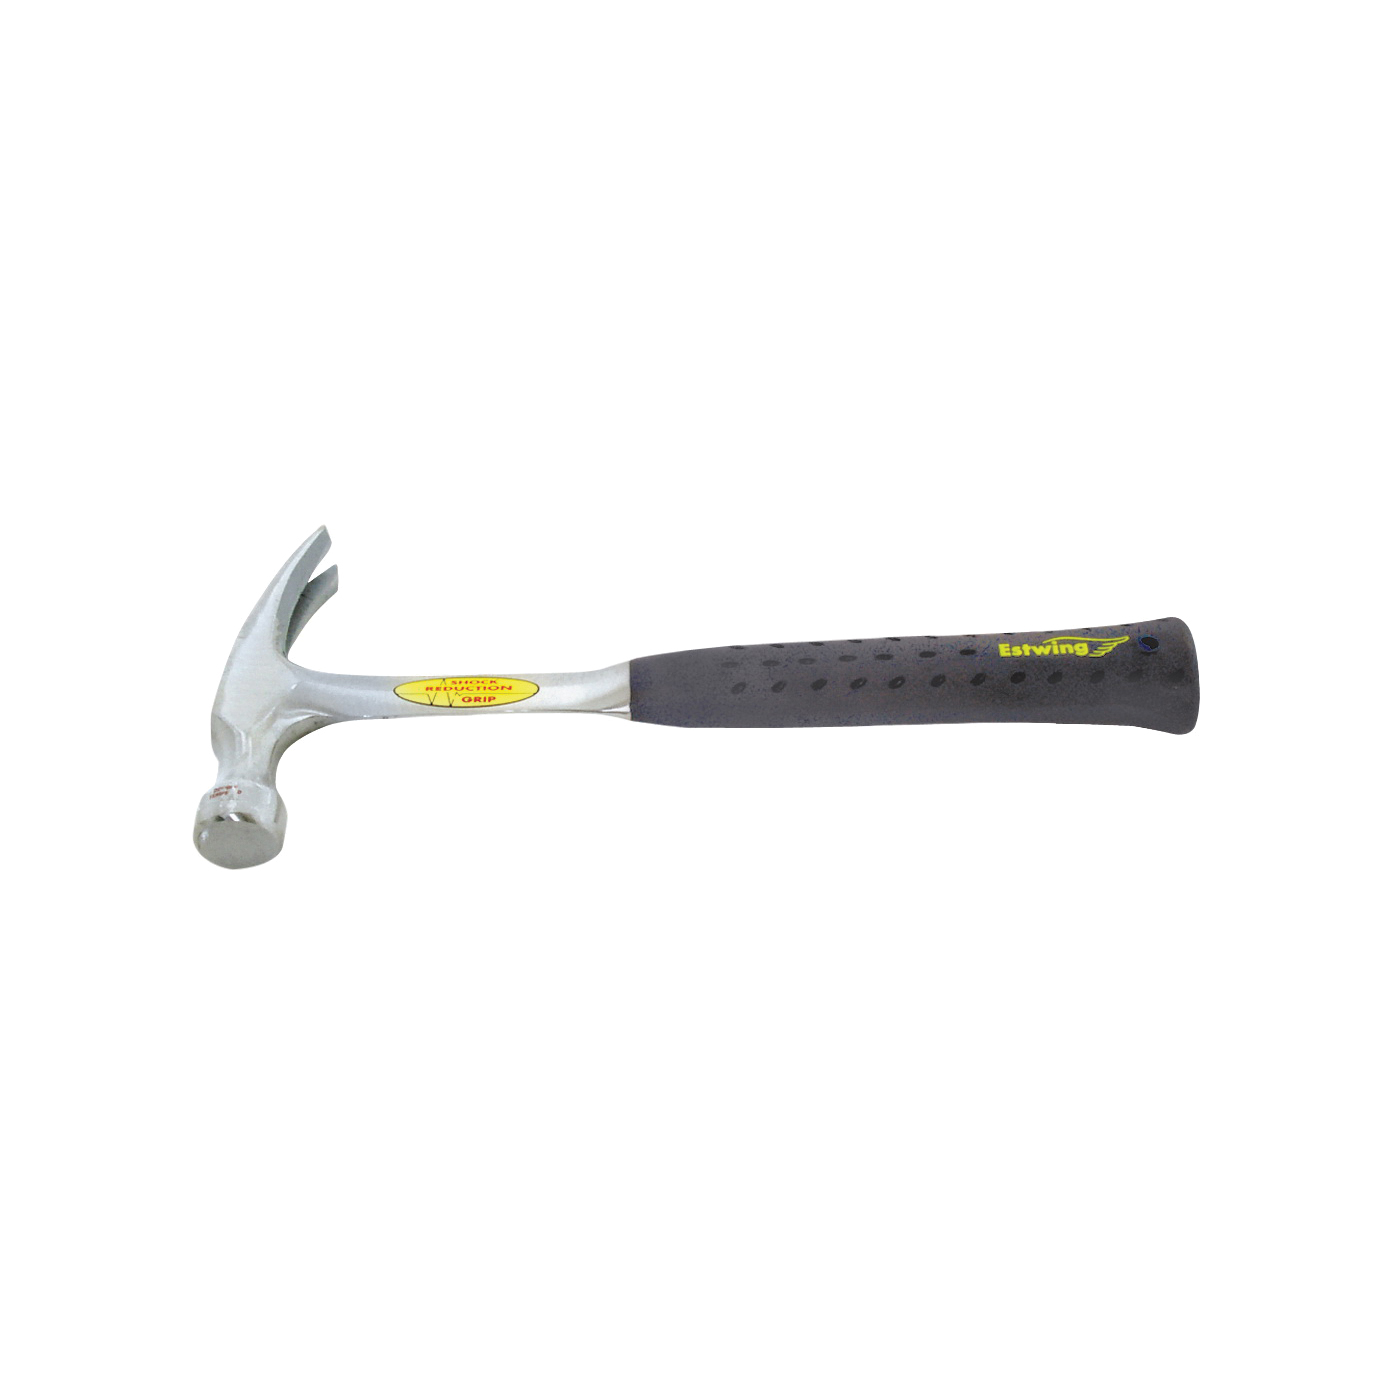 Estwing E3-16S Nail Hammer, 16 oz Head, Rip Claw, Smooth Head, Steel Head, 13 in OAL - 3